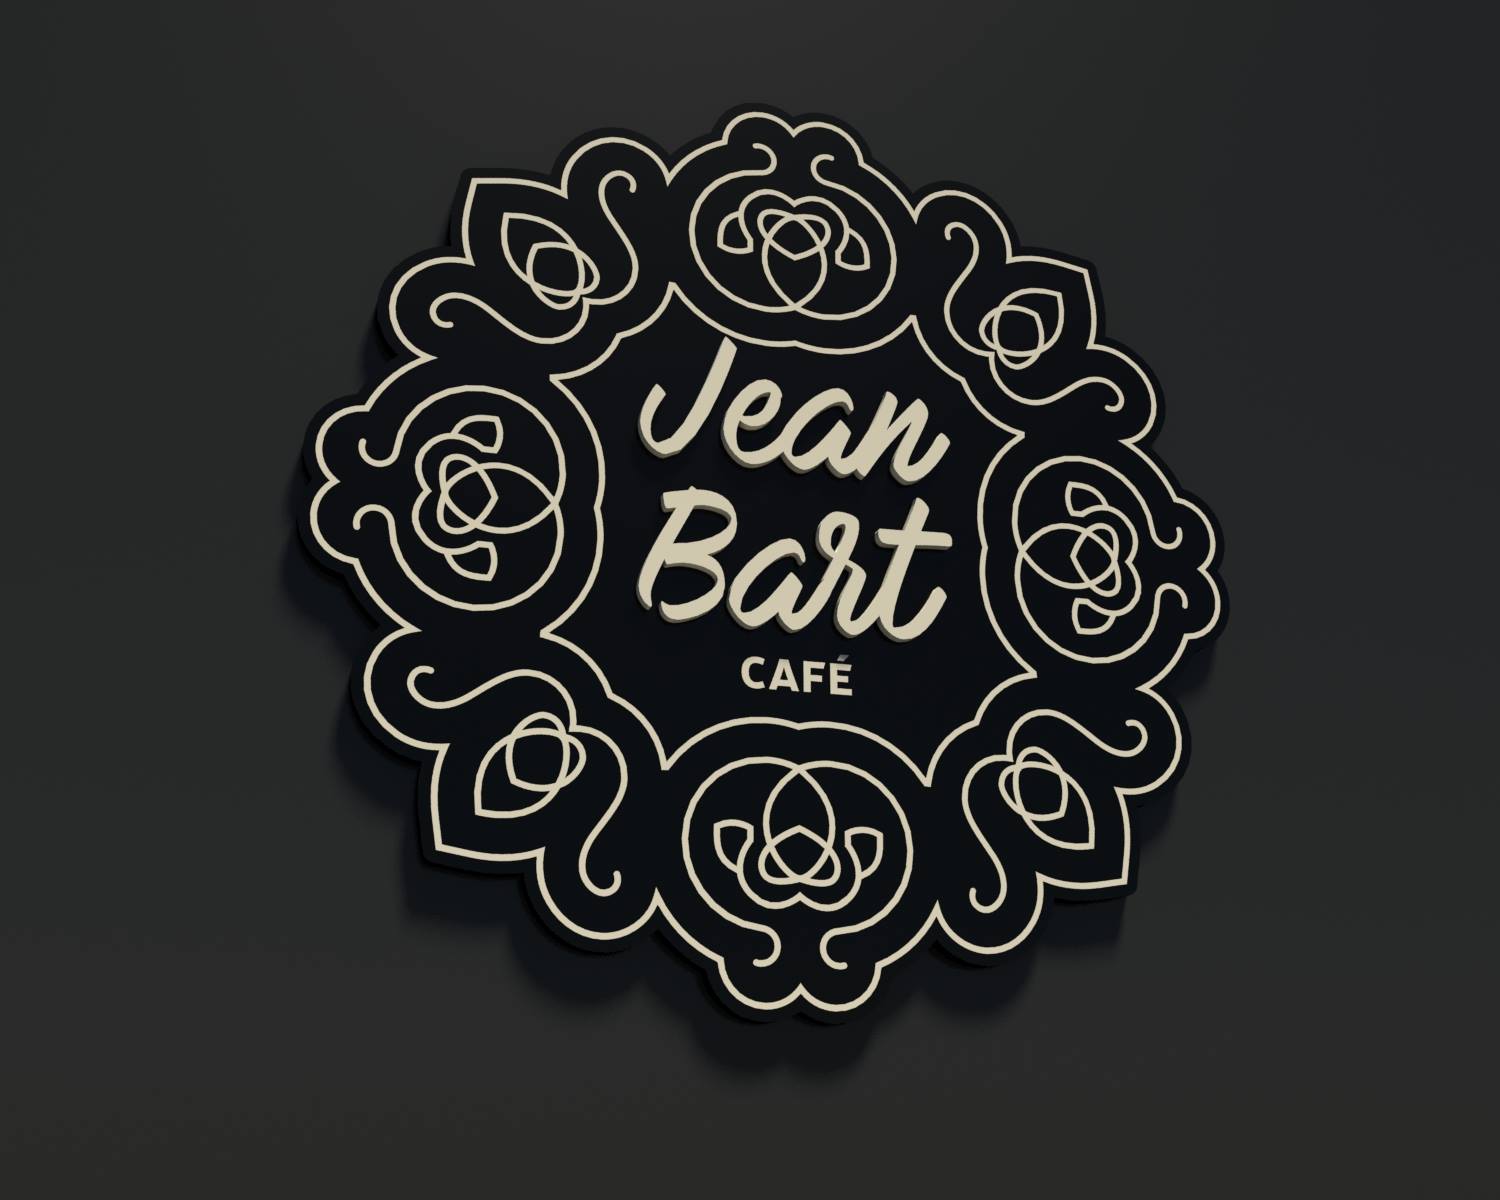 Niort - Jean Bart Café